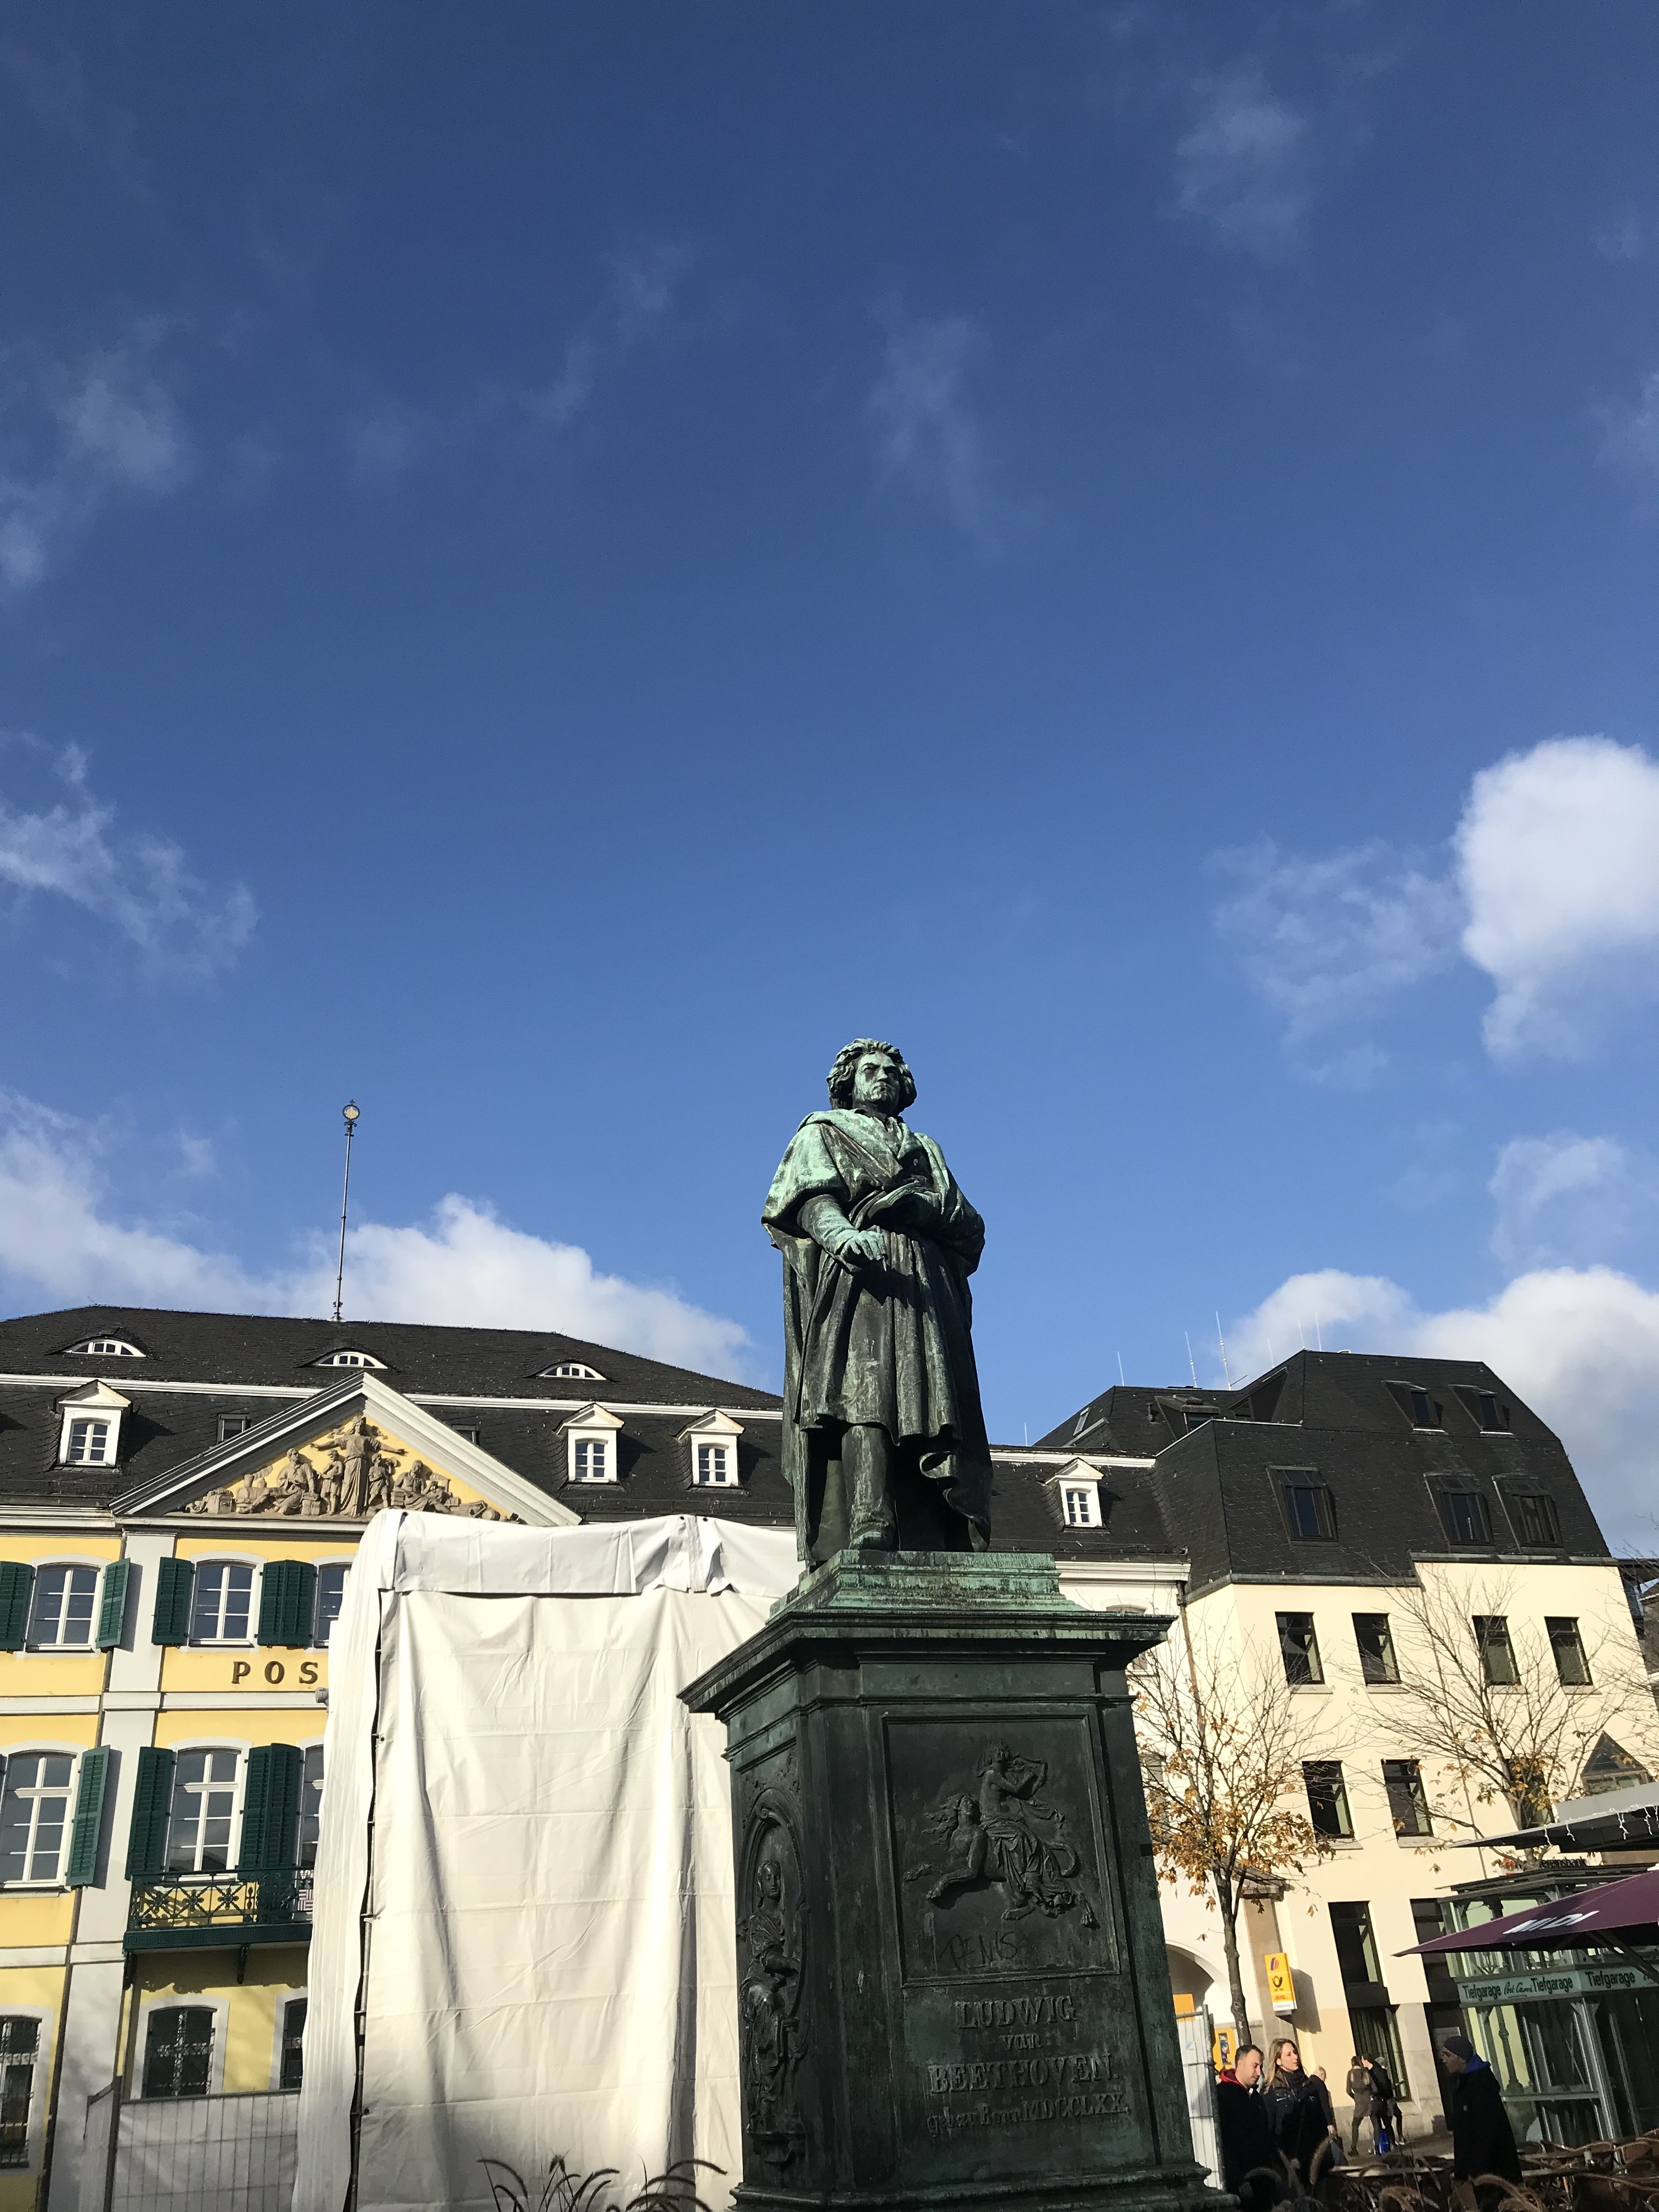 Bonn, birthplace of Beethoven